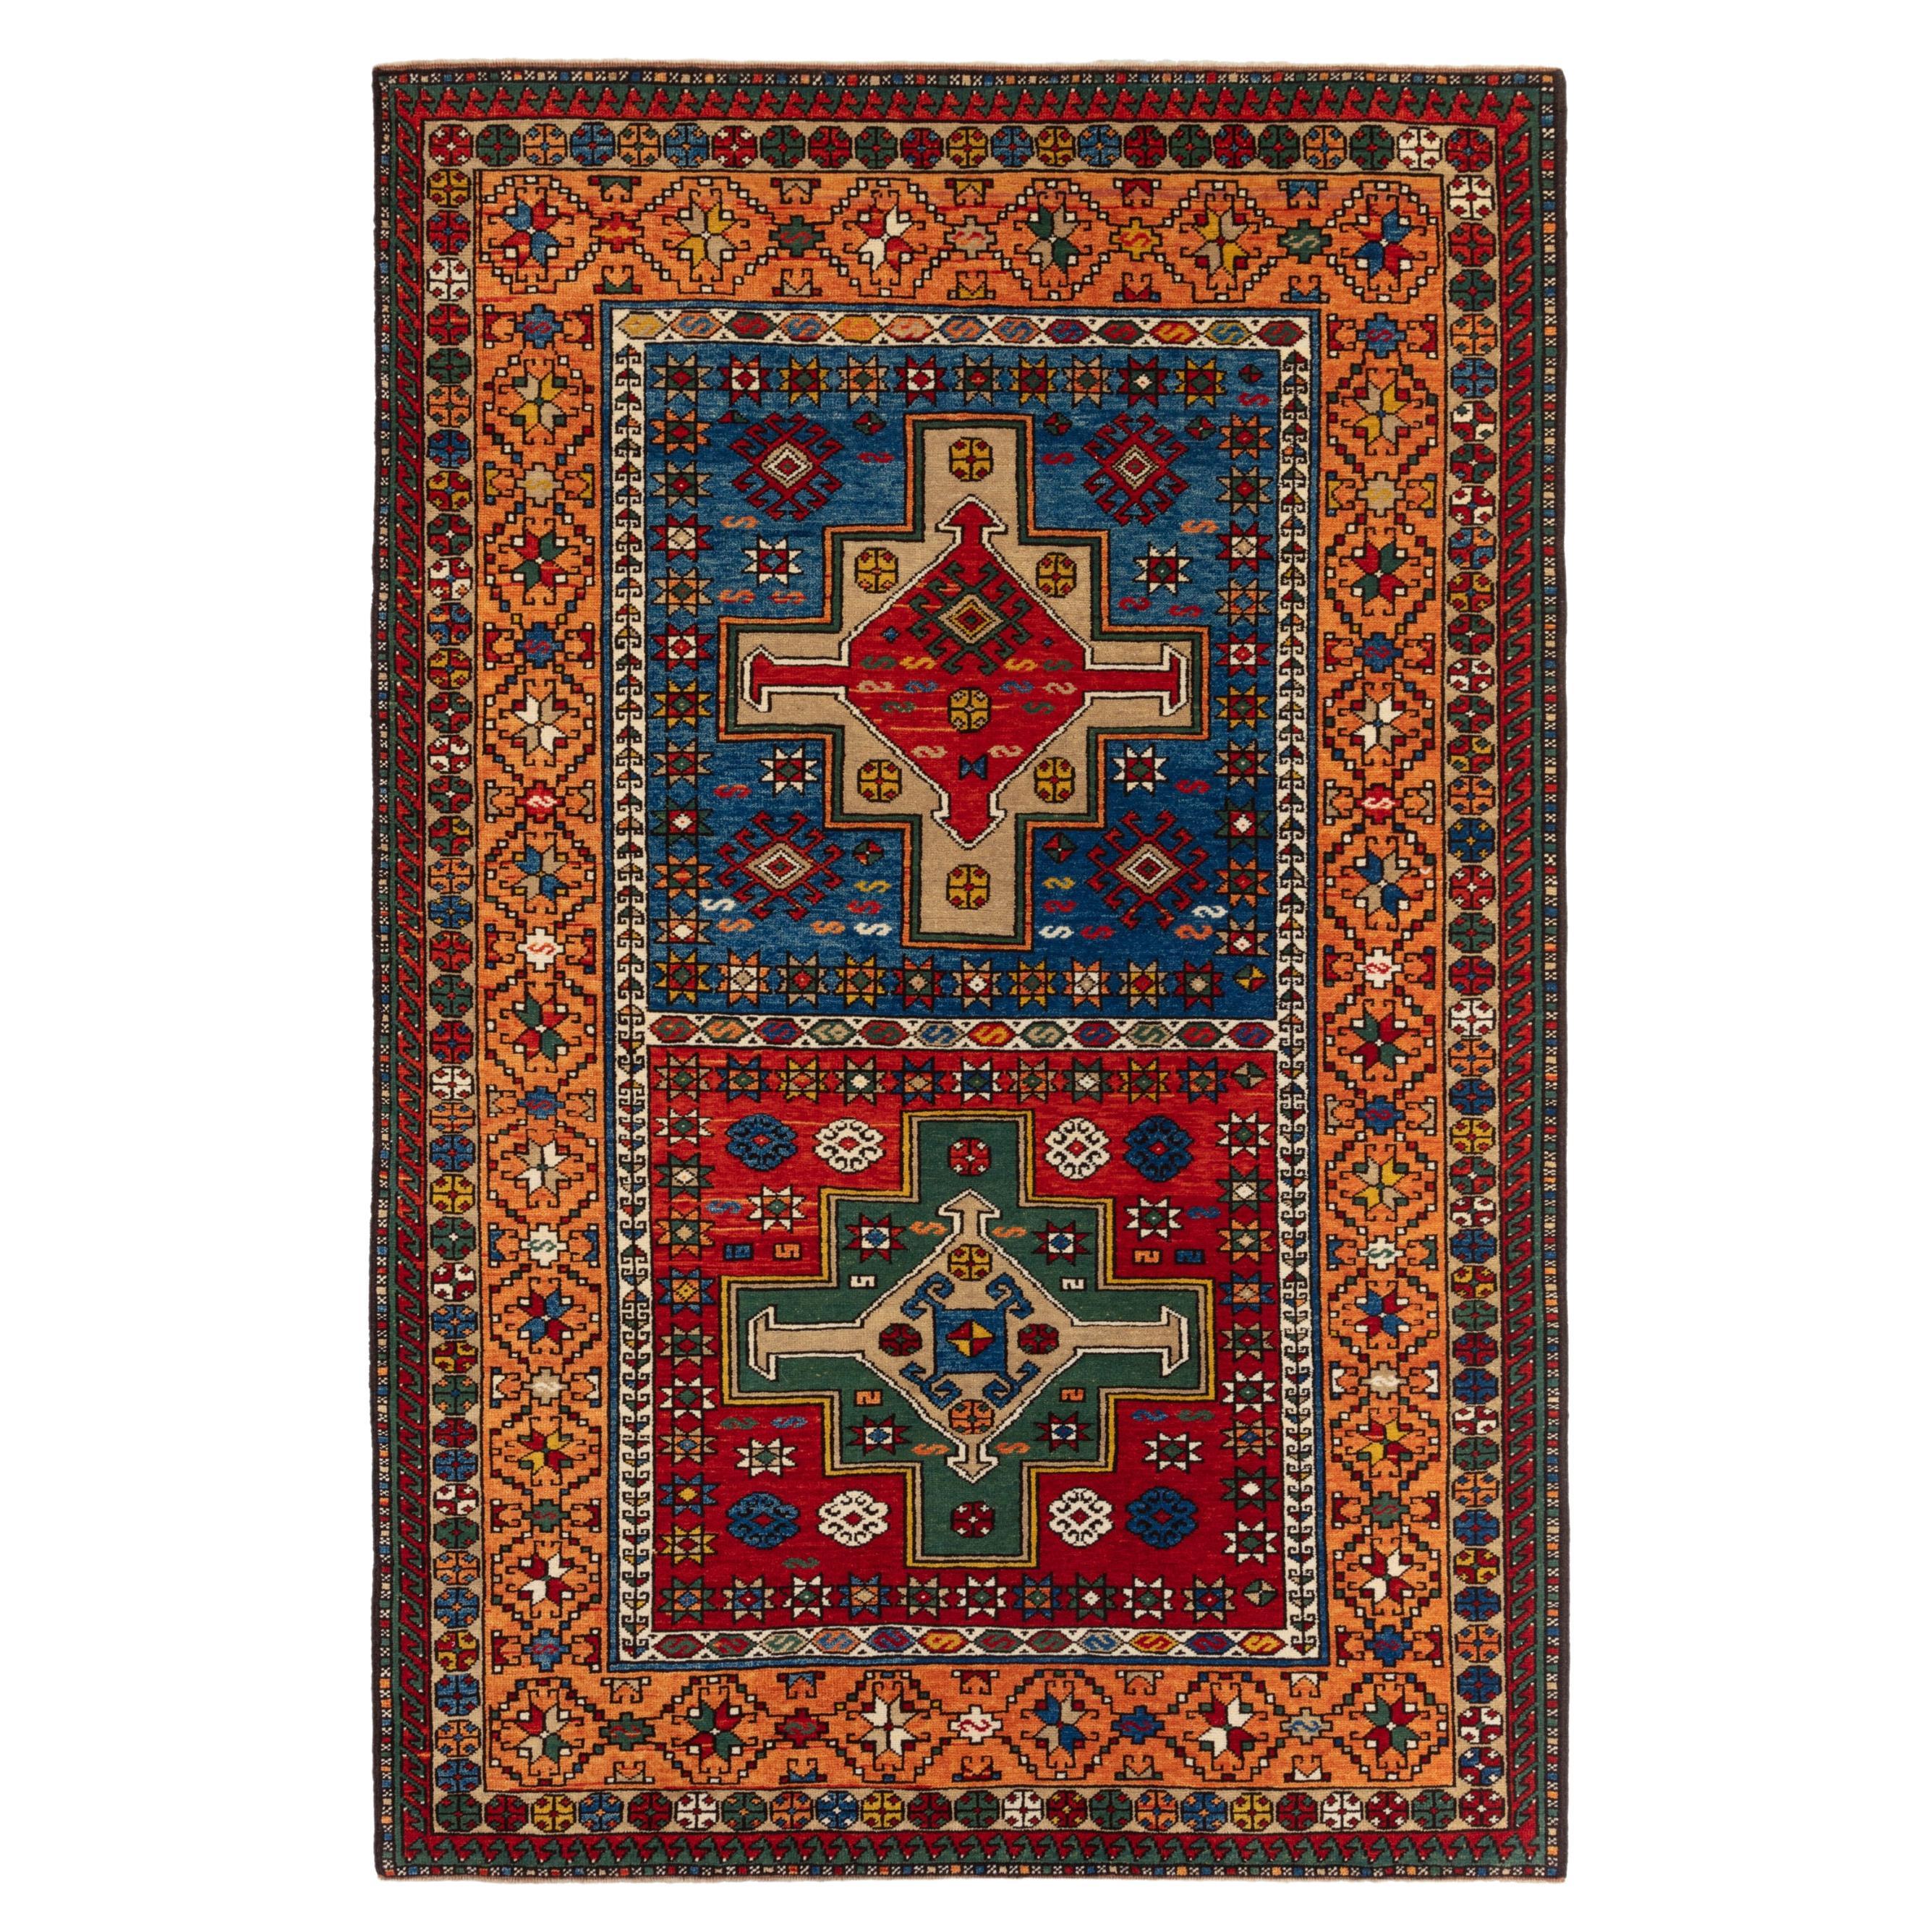 Ararat Rugs Two Medallions Kagizman Kazak Rug Antique Revival Carpet Natural Dye